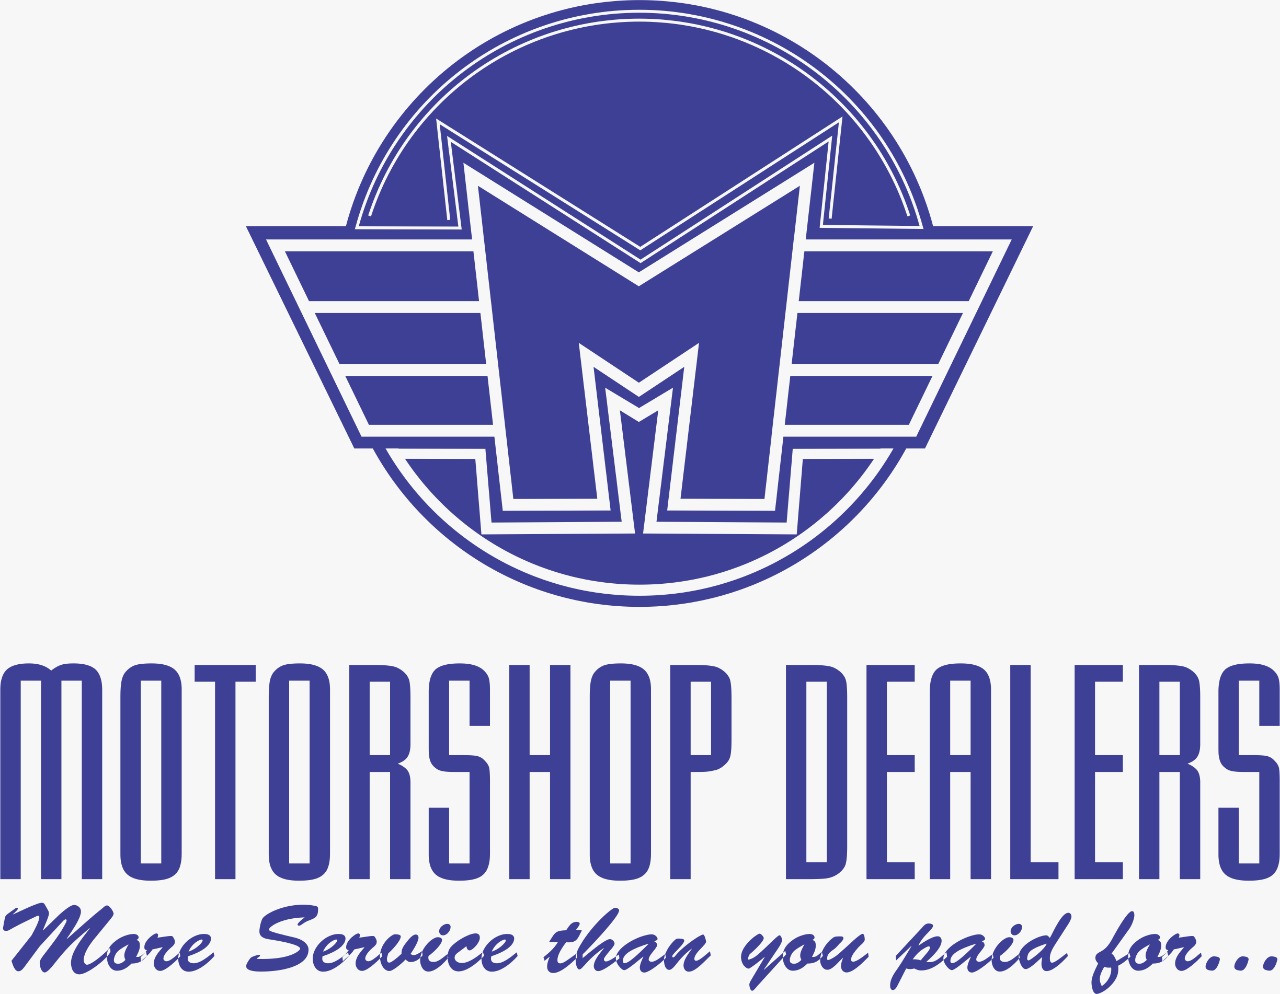 Motorshop Dealers